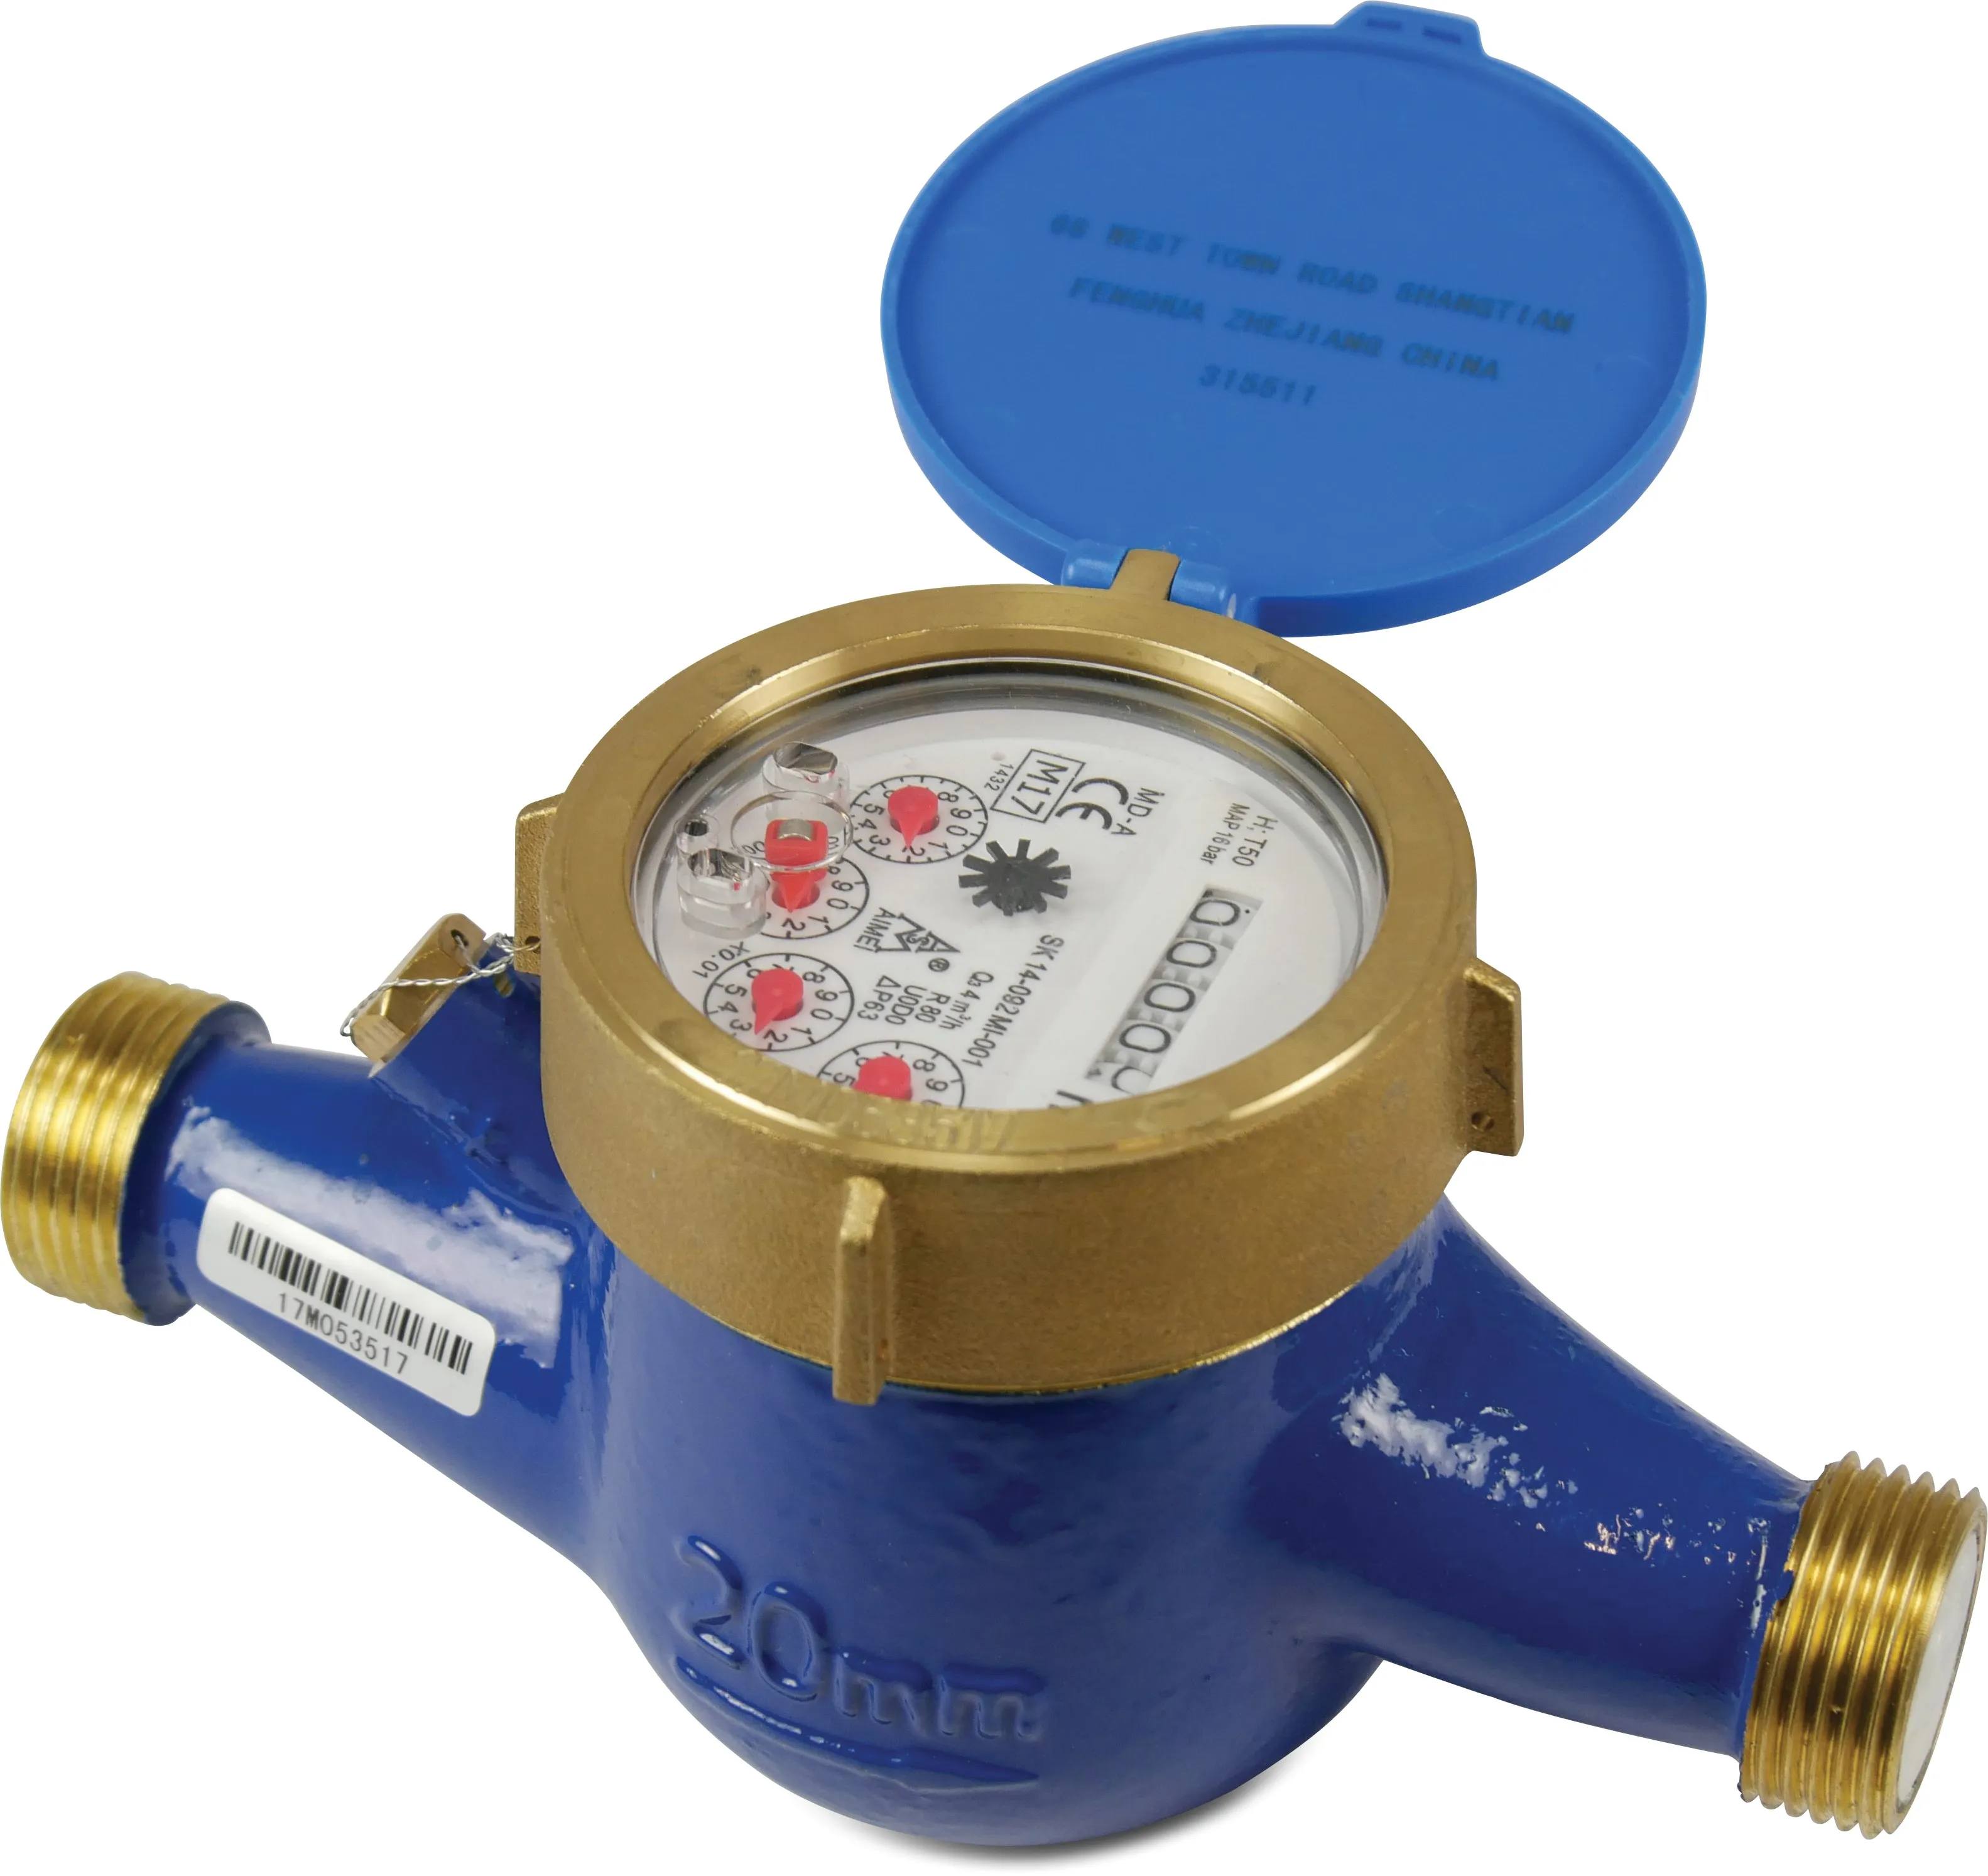 Profec Water meter brass 1 1/2" male thread 16bar 6m³/h type TL multi jet horizontal with pulse option